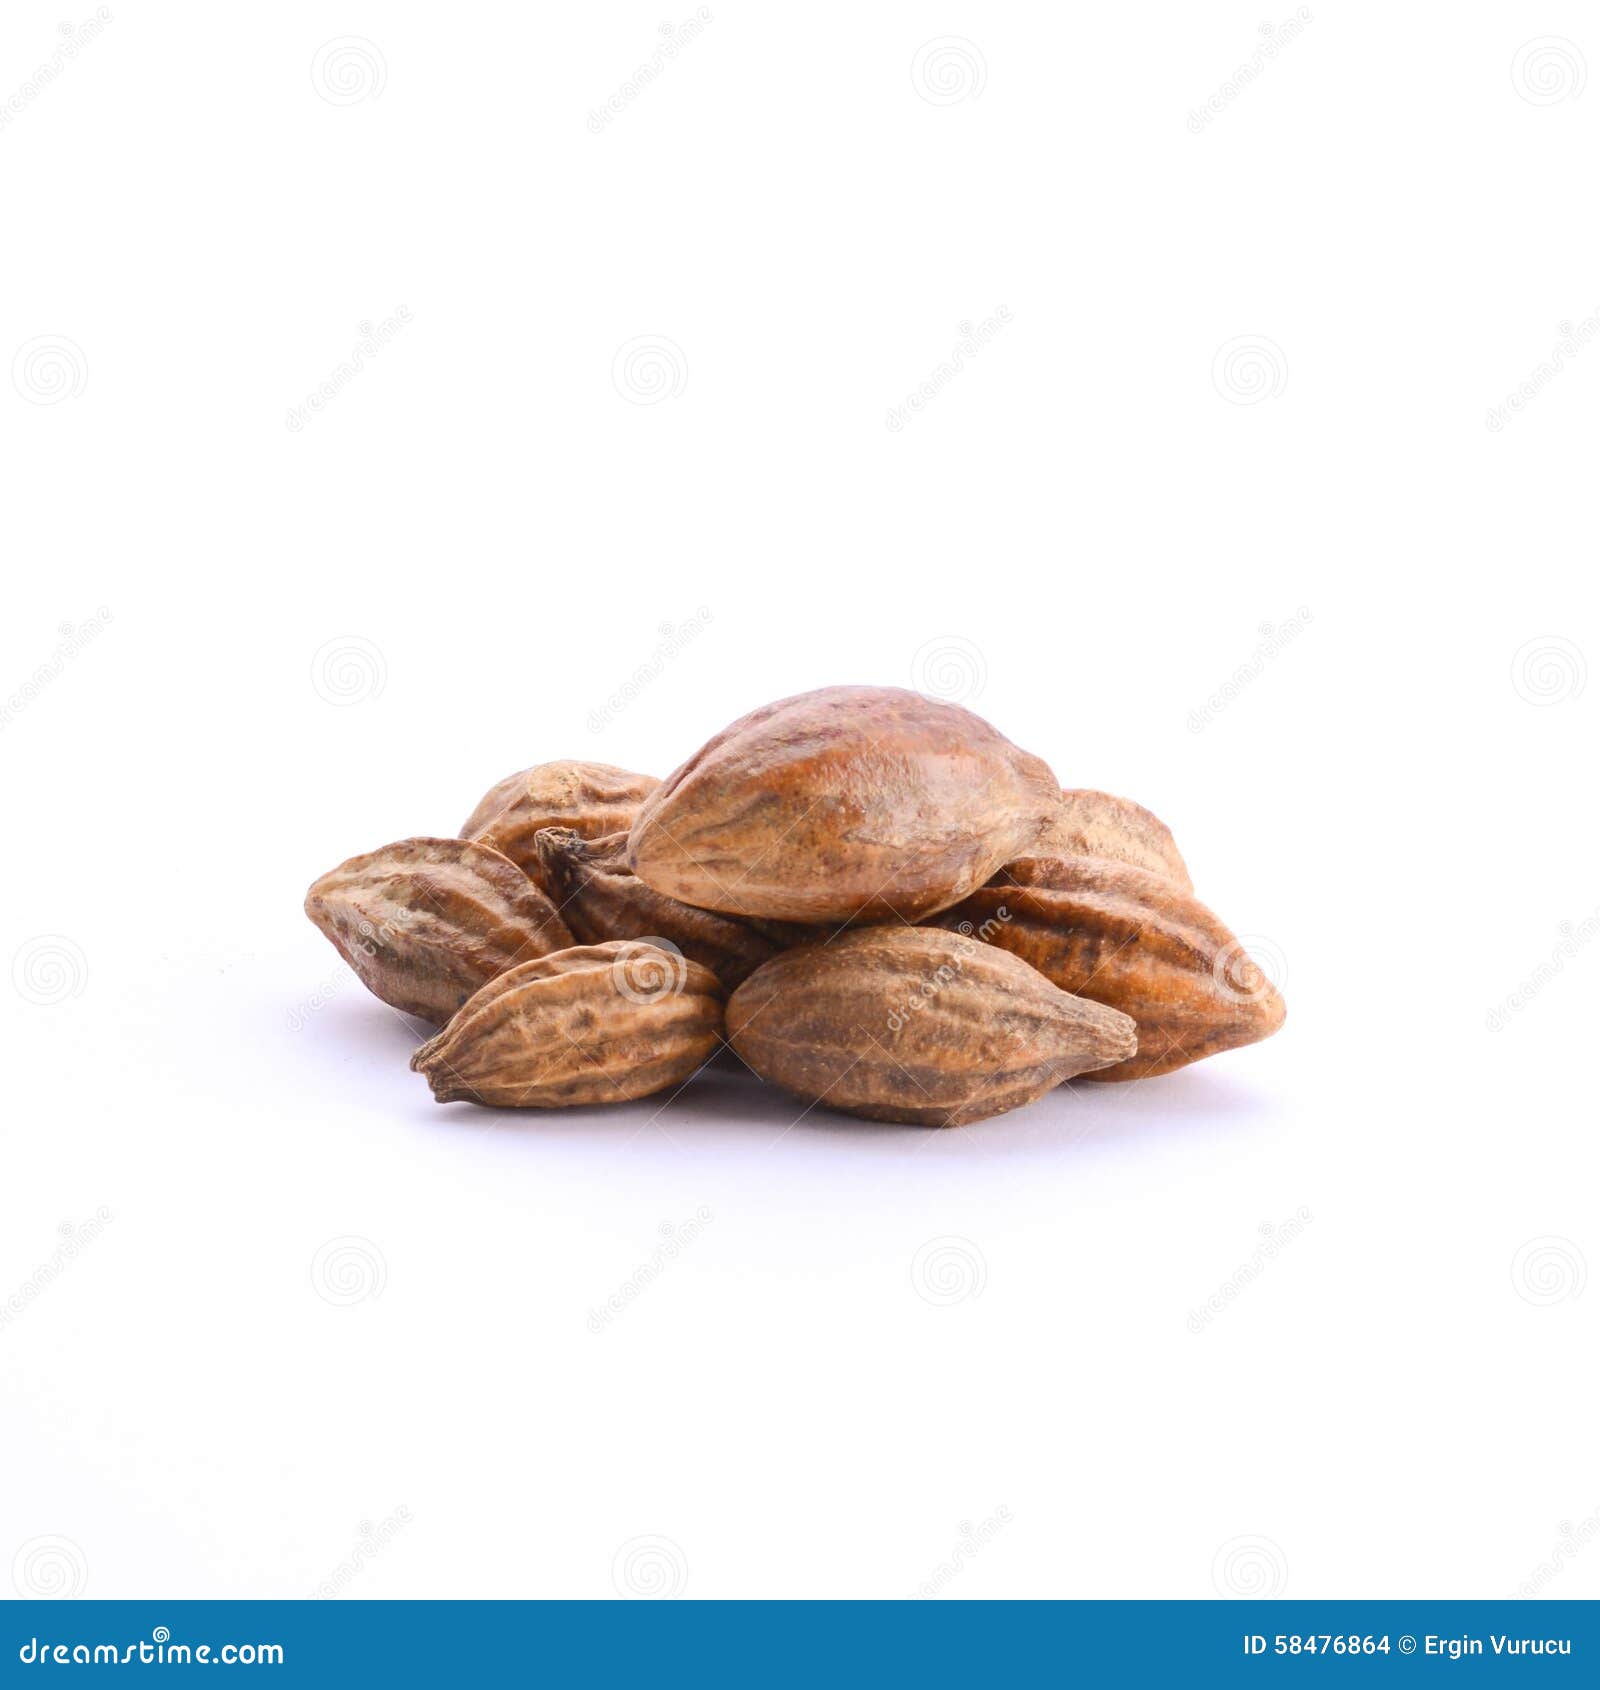 bitter almond - prunus amygdalus var.amara